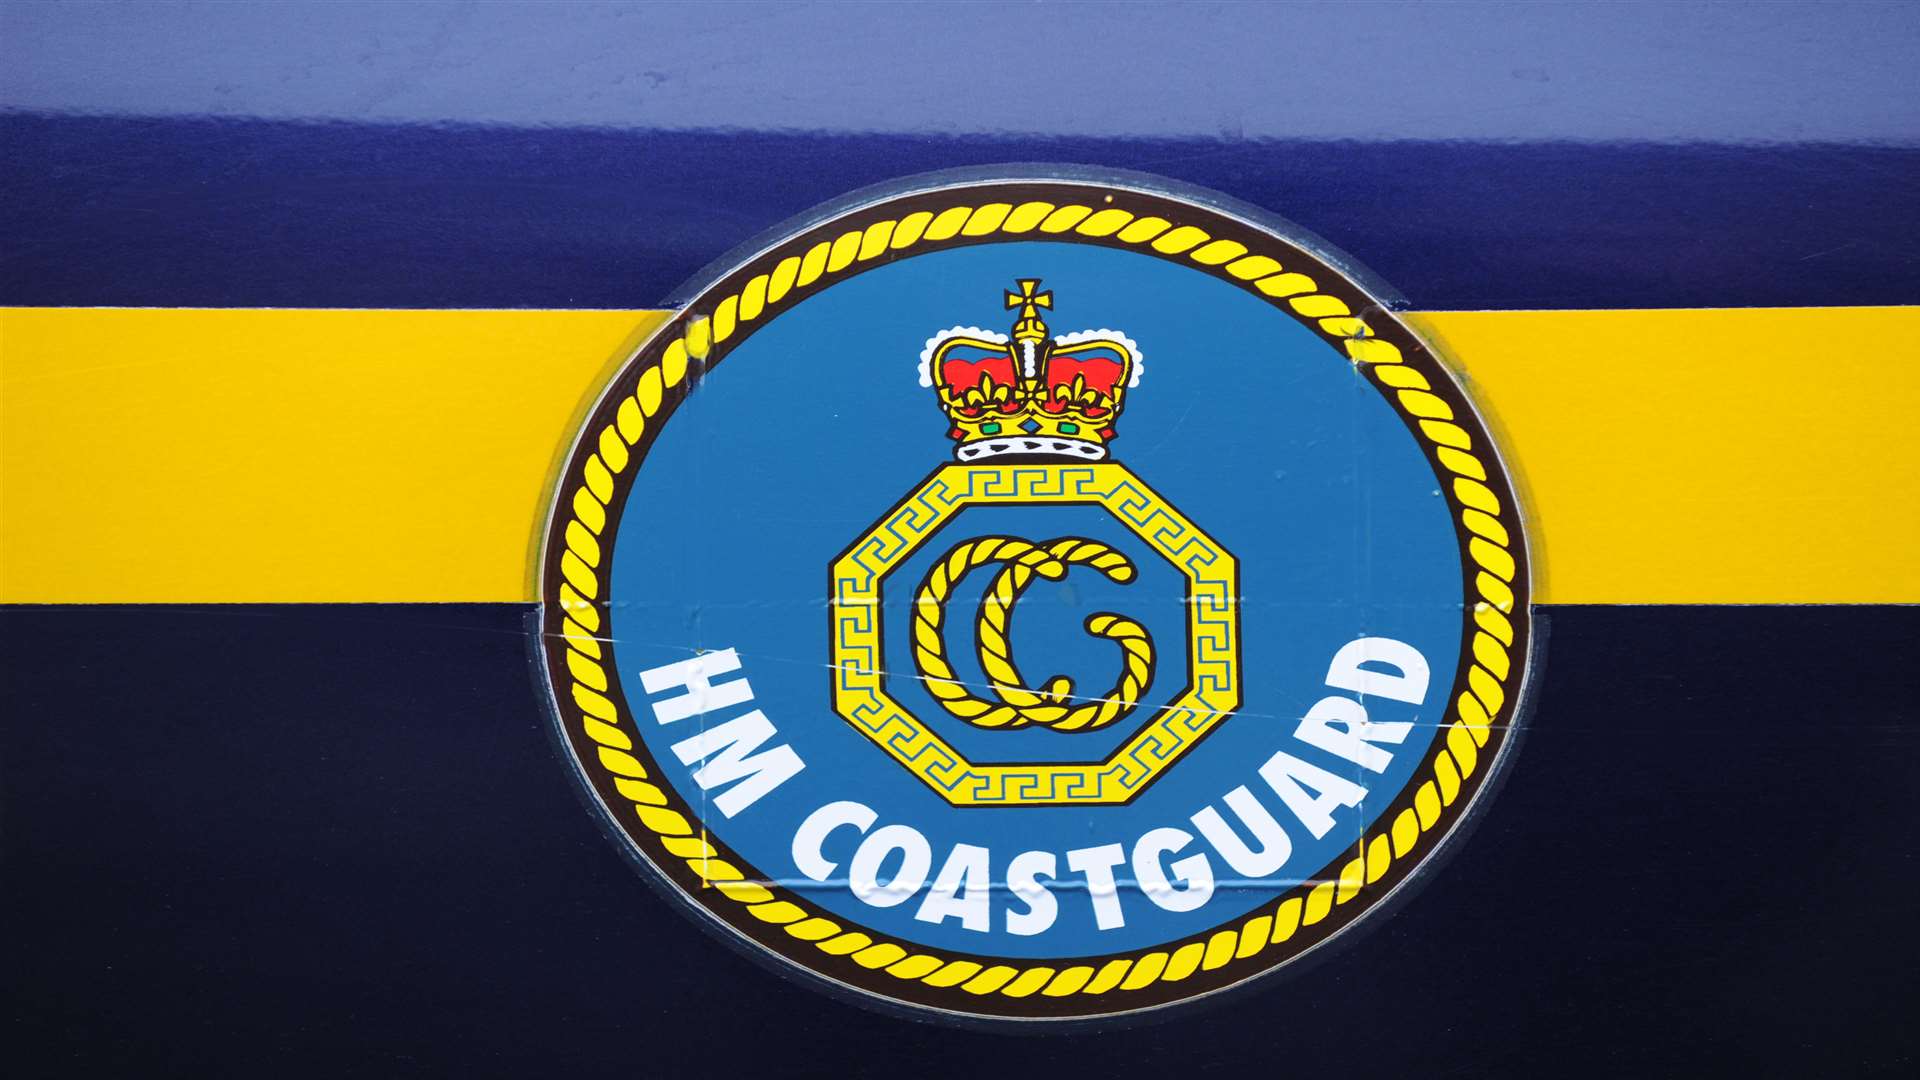 Medway Coastguard. Library image.